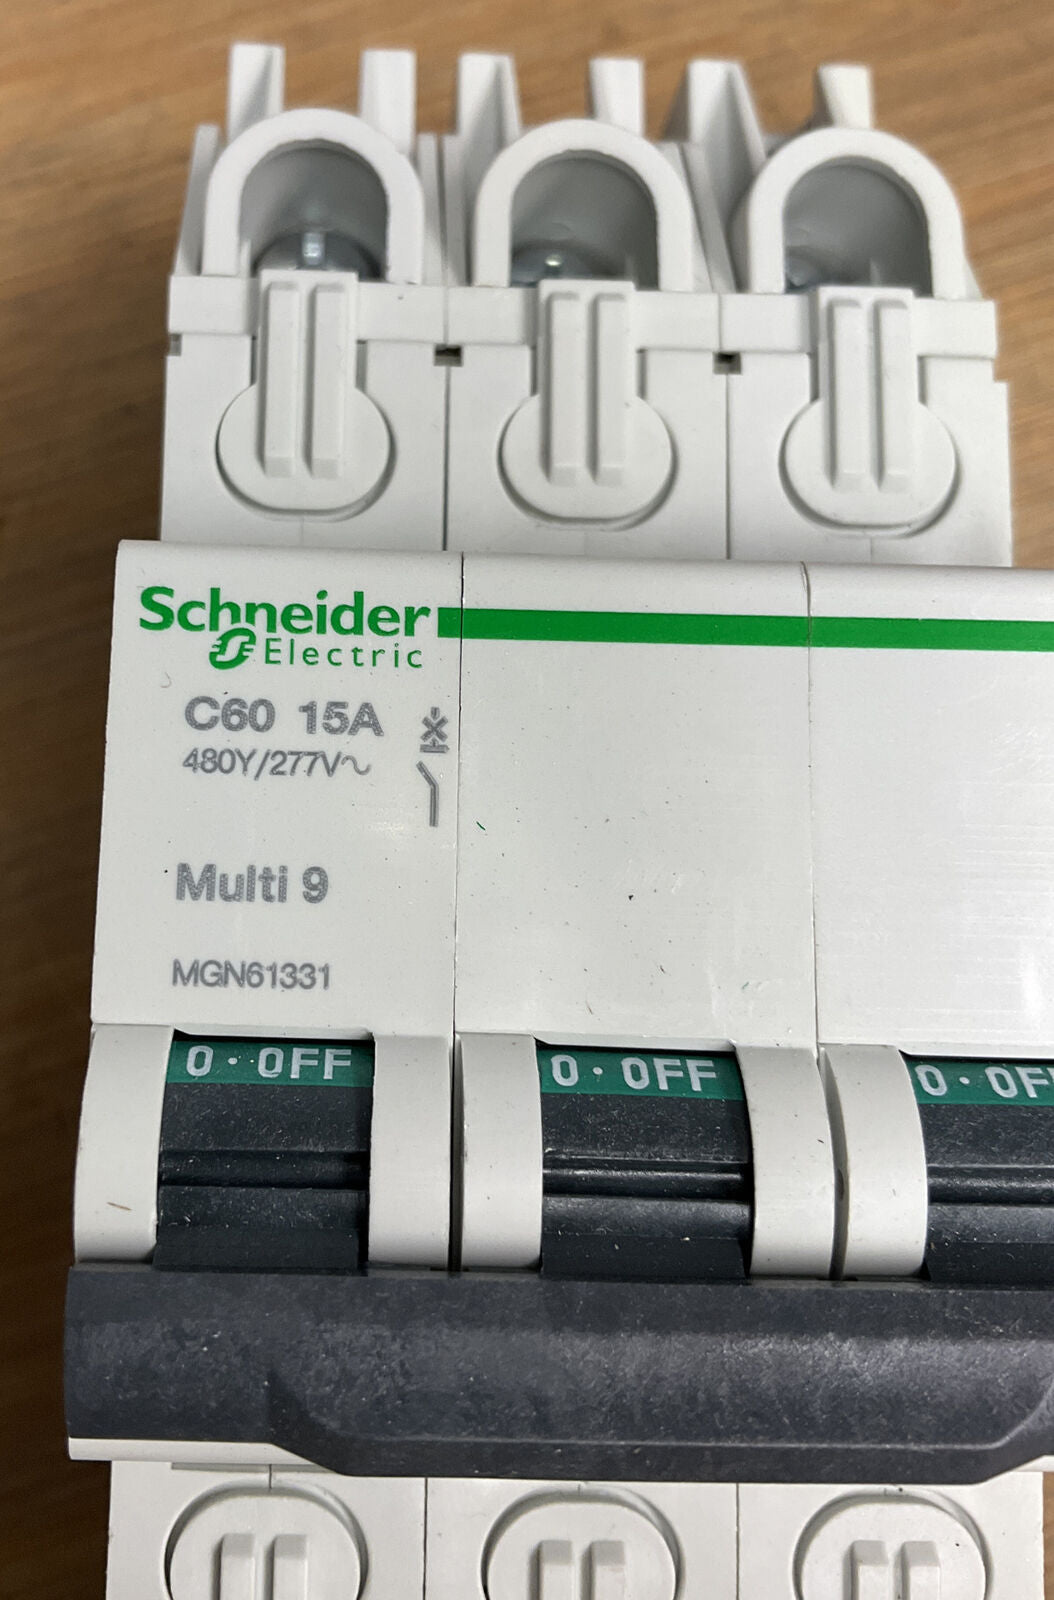 Schneider Electric MGN61331 New MULTI 9 C60 C 15A CIRCUIT BREAKER (RE218)